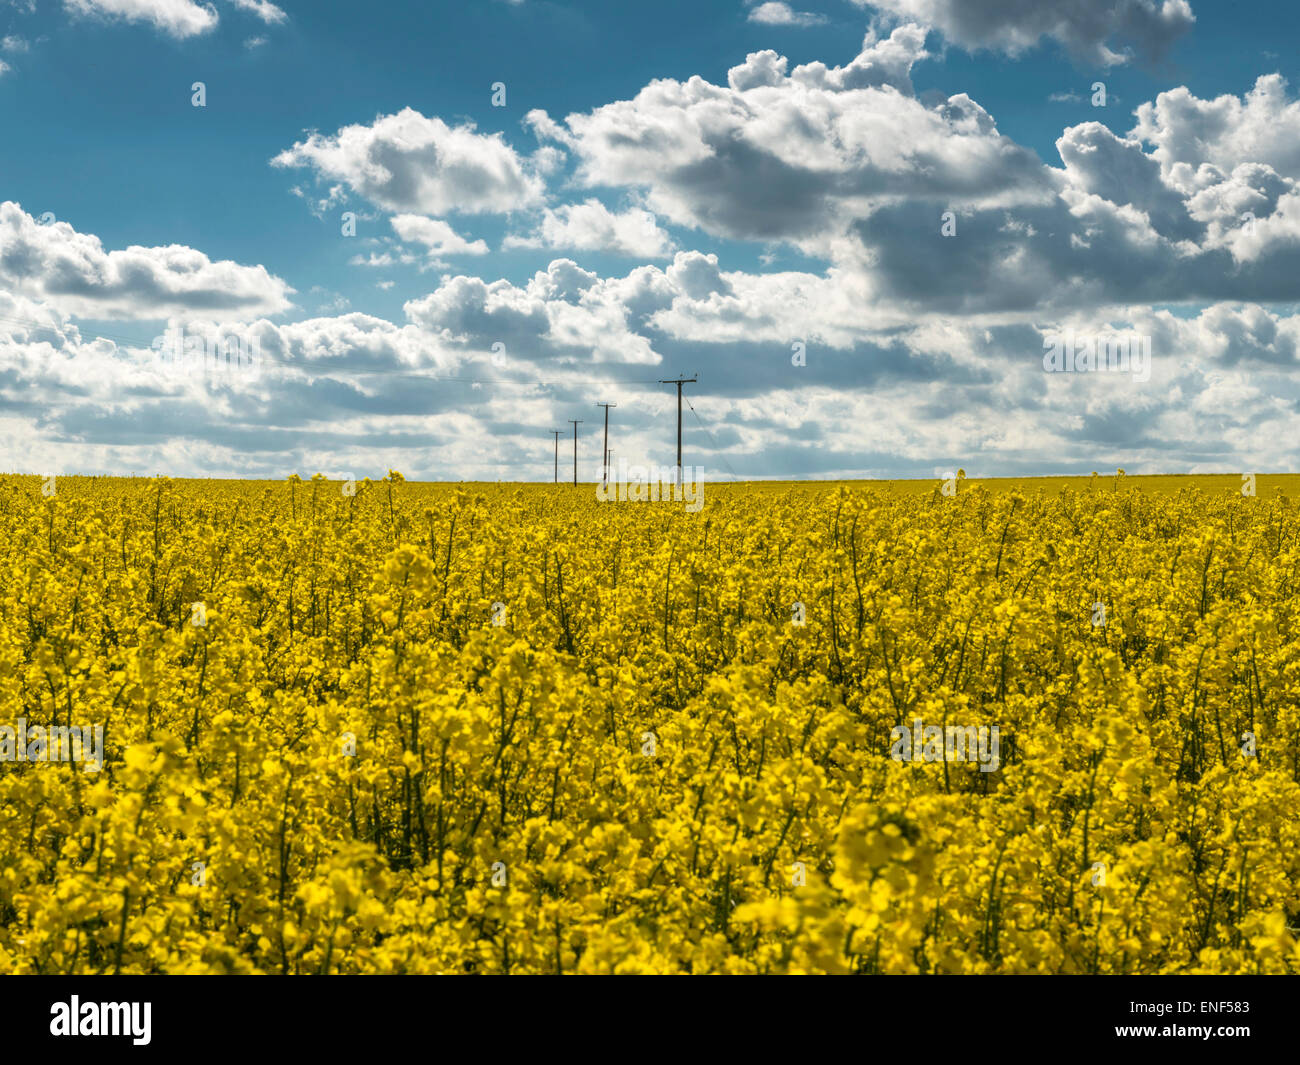 Englische Grafschaft Landschaft - Gewitterwolken über Golden Raps Feld Stockfoto